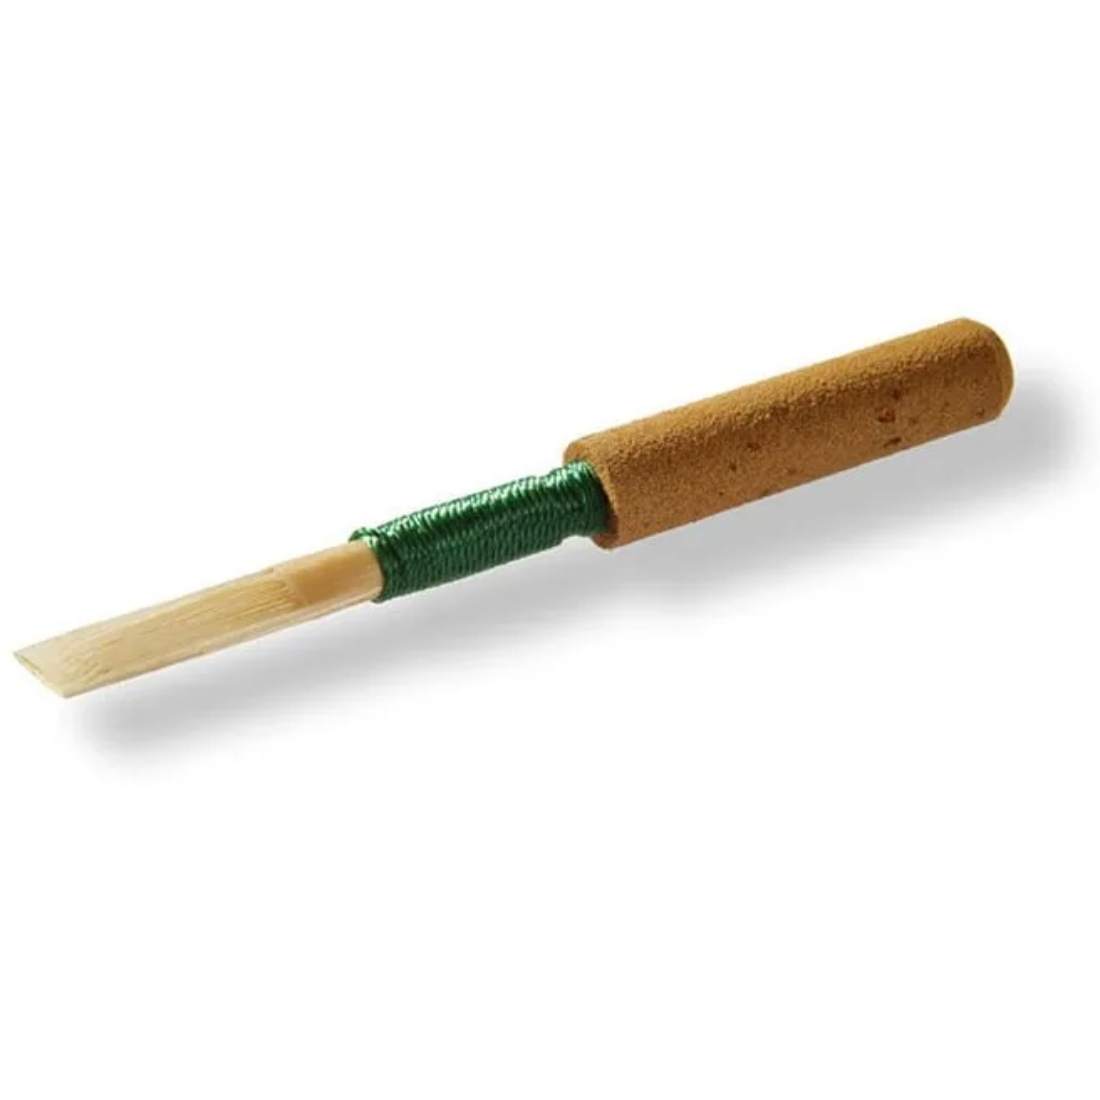 Fox oboe reed with dark green threading